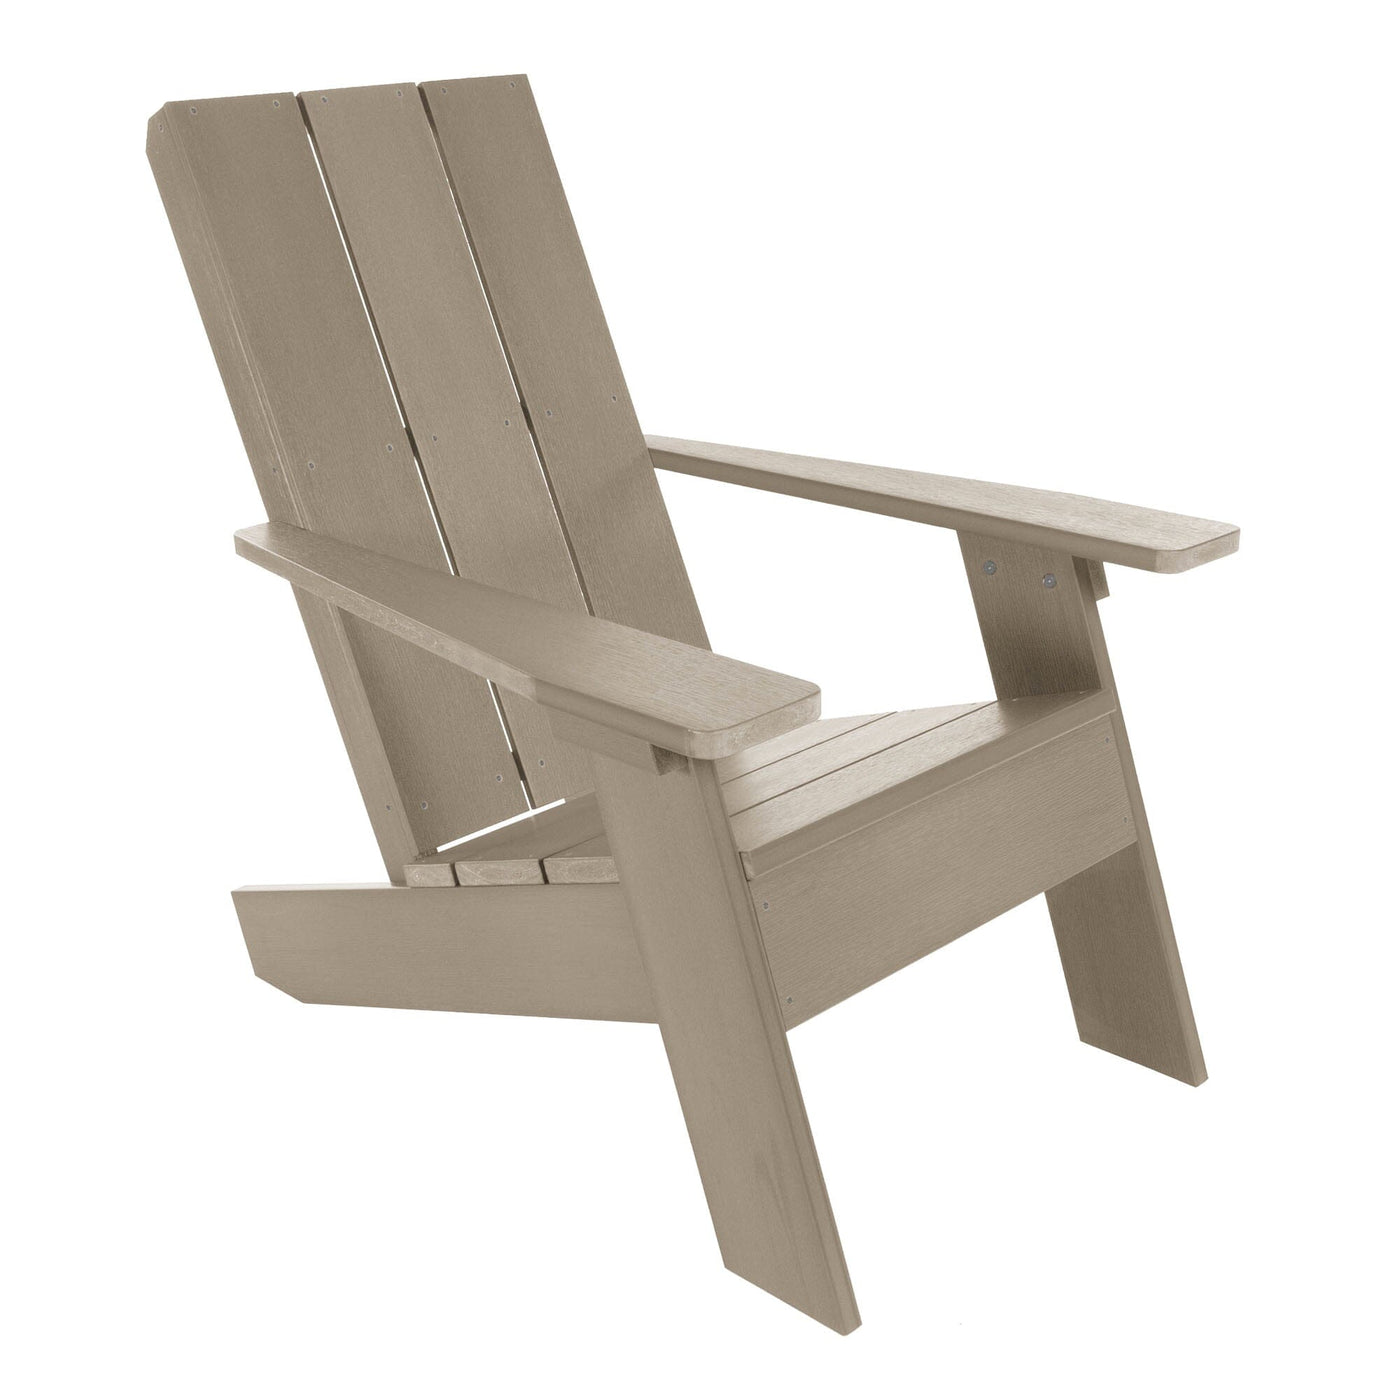 Italica Modern Adirondack Chair in Woodland Brown